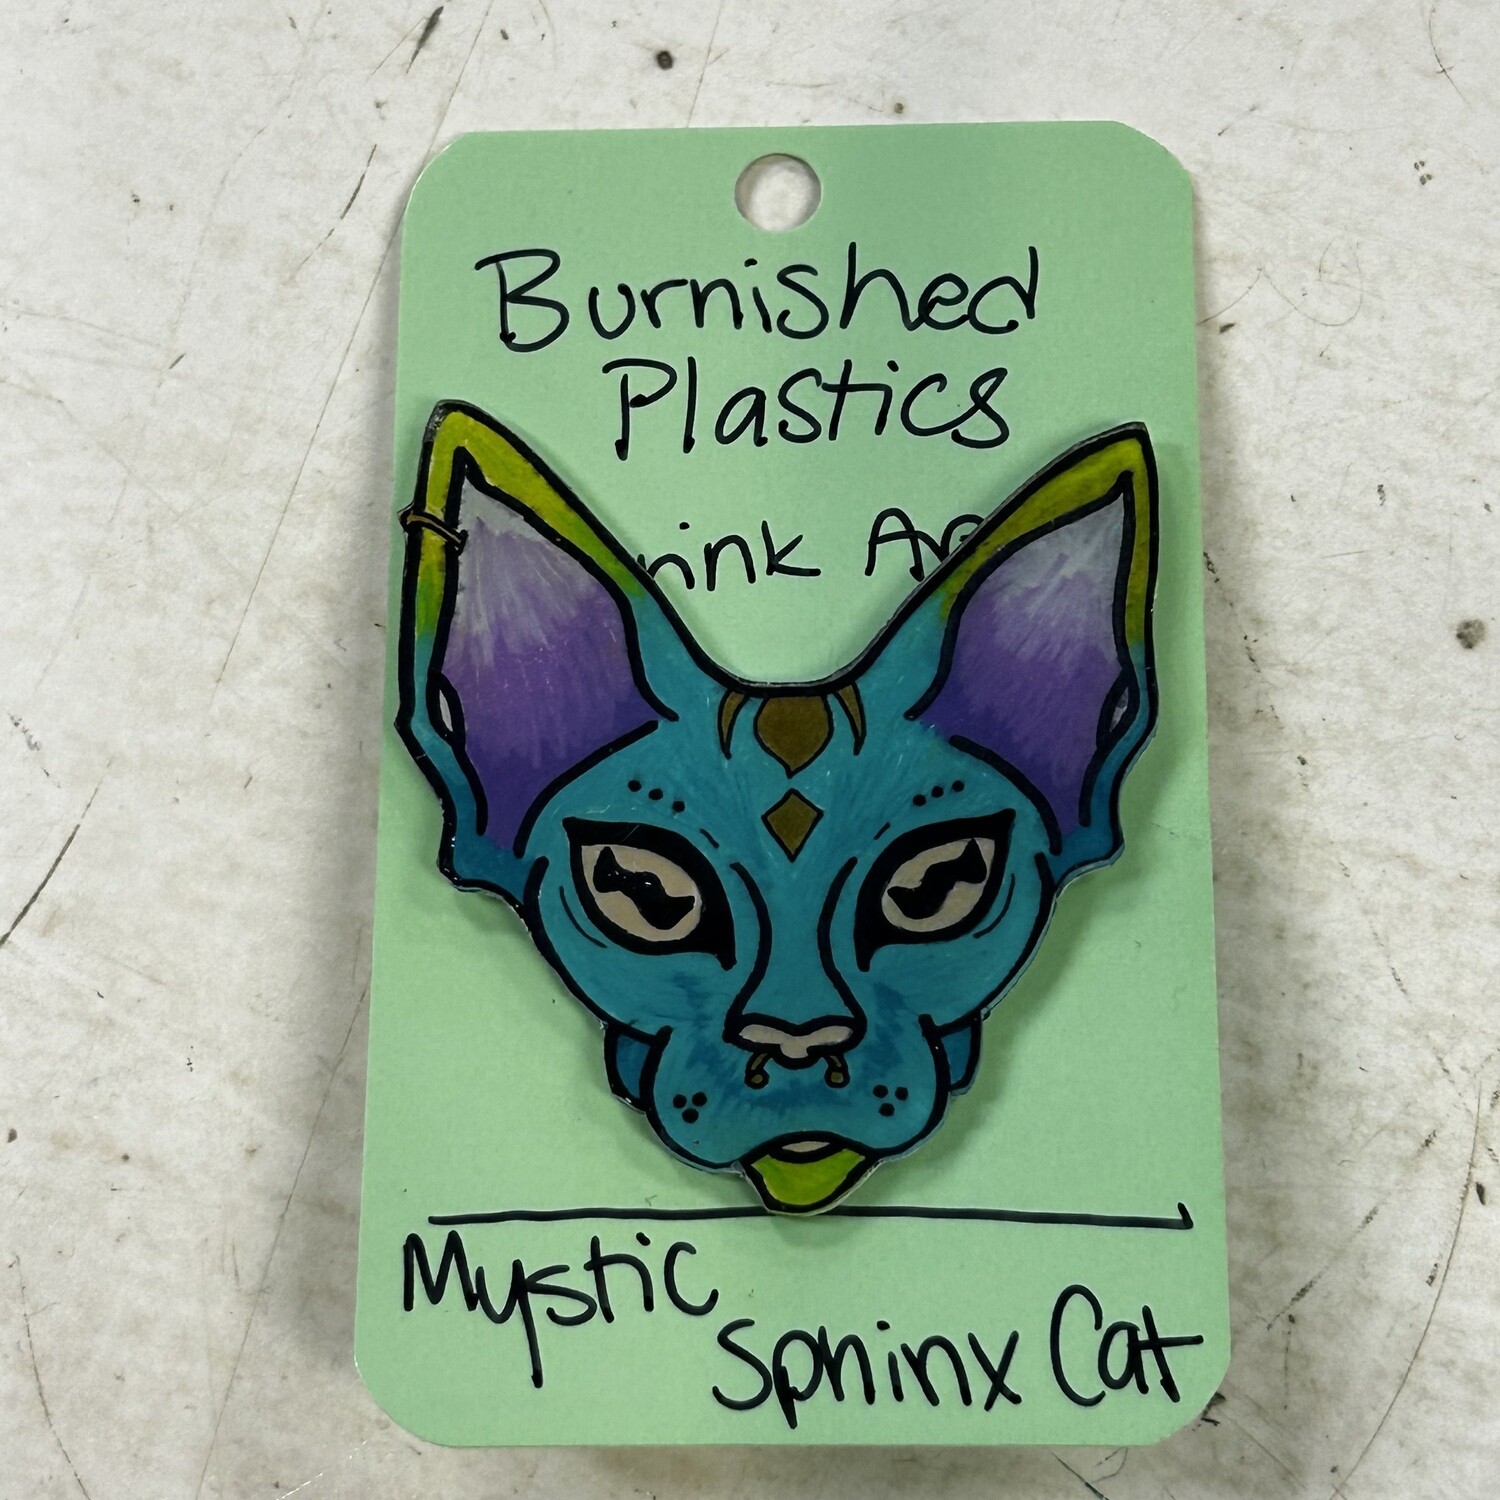 BURNISHED PLASTICS: Sphinx Cat - Shrink Art Pin by Kaiju Cabal